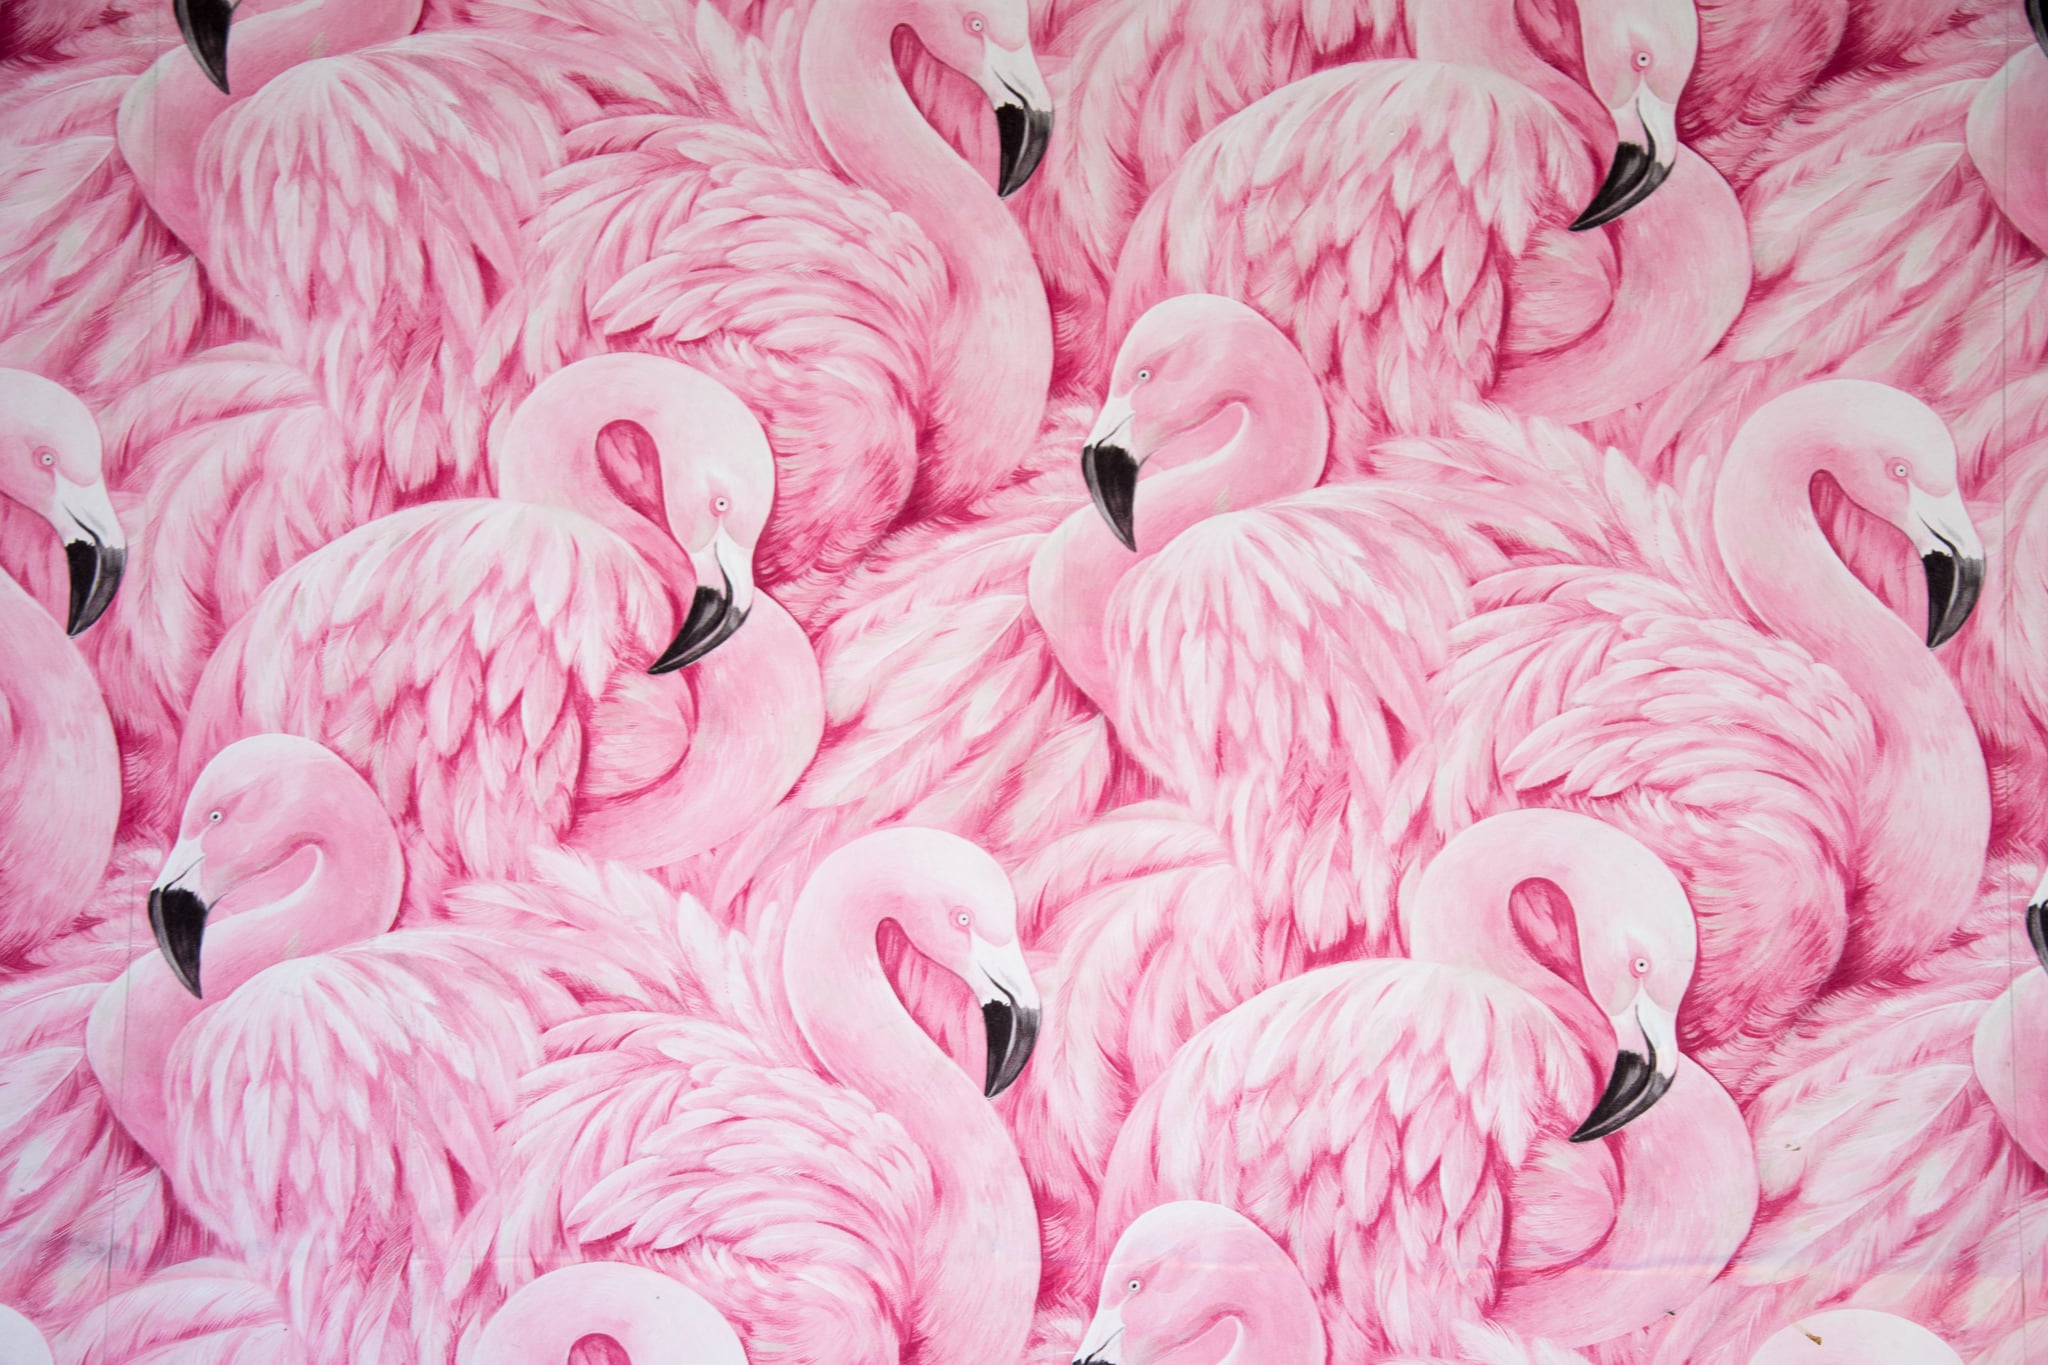 Spring Desktop Wallpapers Flamingo Wallpaper  Free and Fabulous Desktop  Wallpapers For Spring  POPSUGAR Tech Photo 16